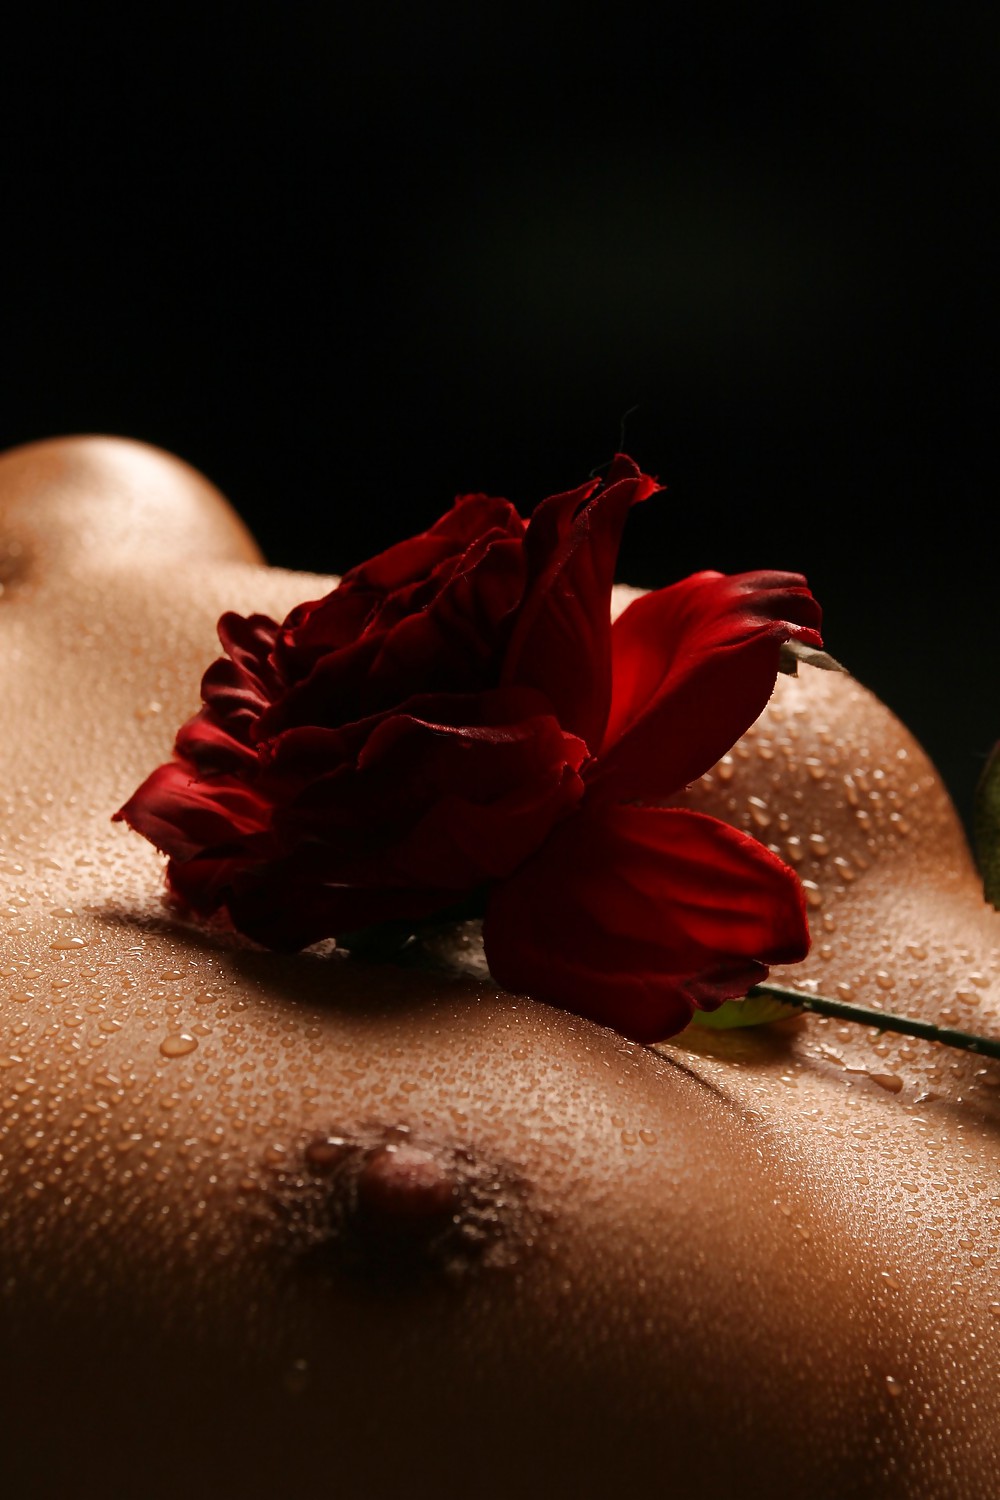 Erotic Art of Roses - Session 2 #4232424